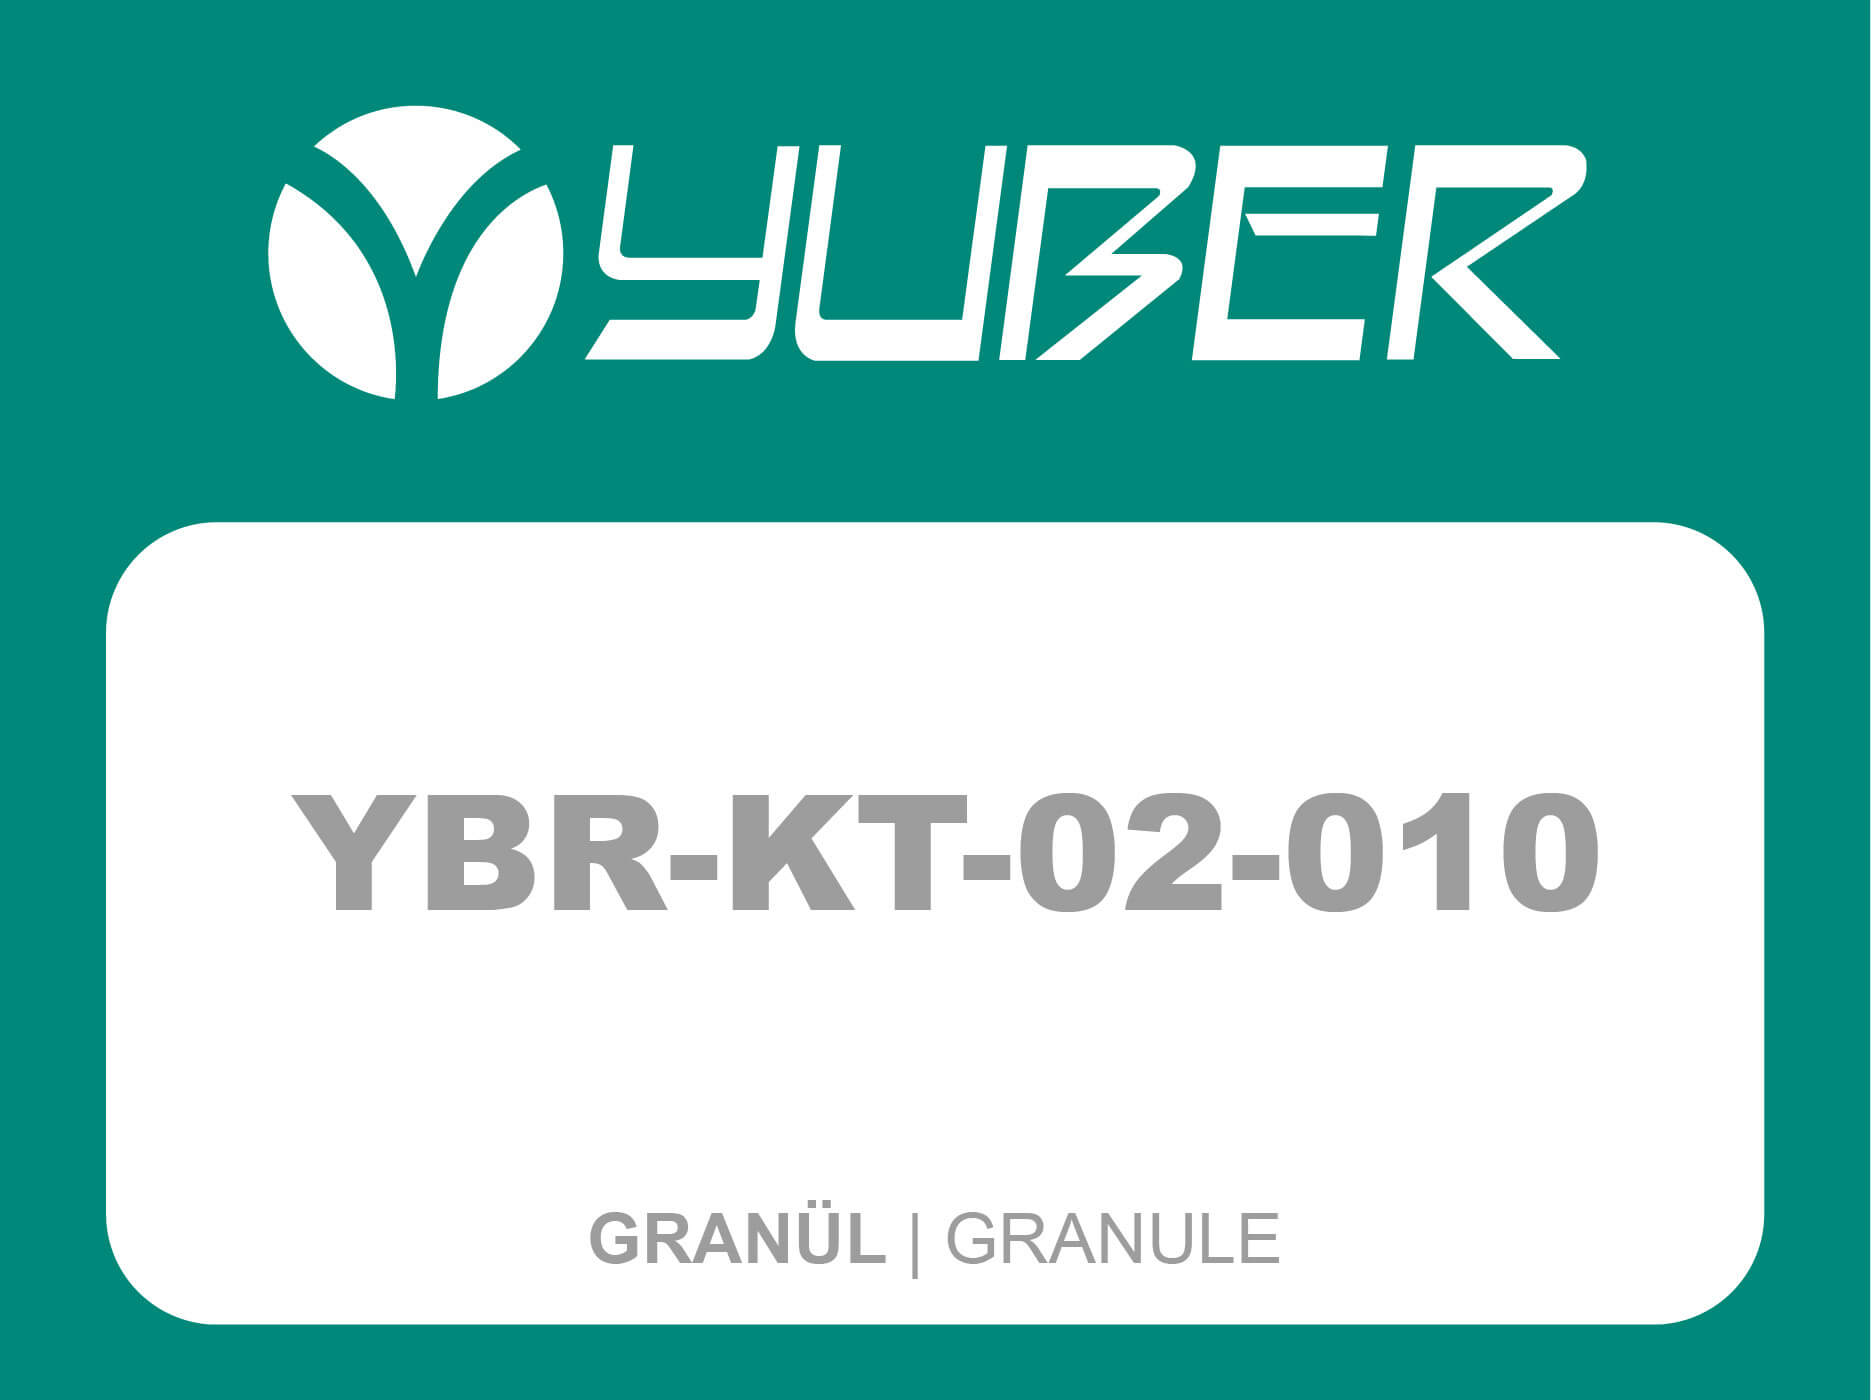 YBR KT 02 010 Granule Yuber Metallurgy